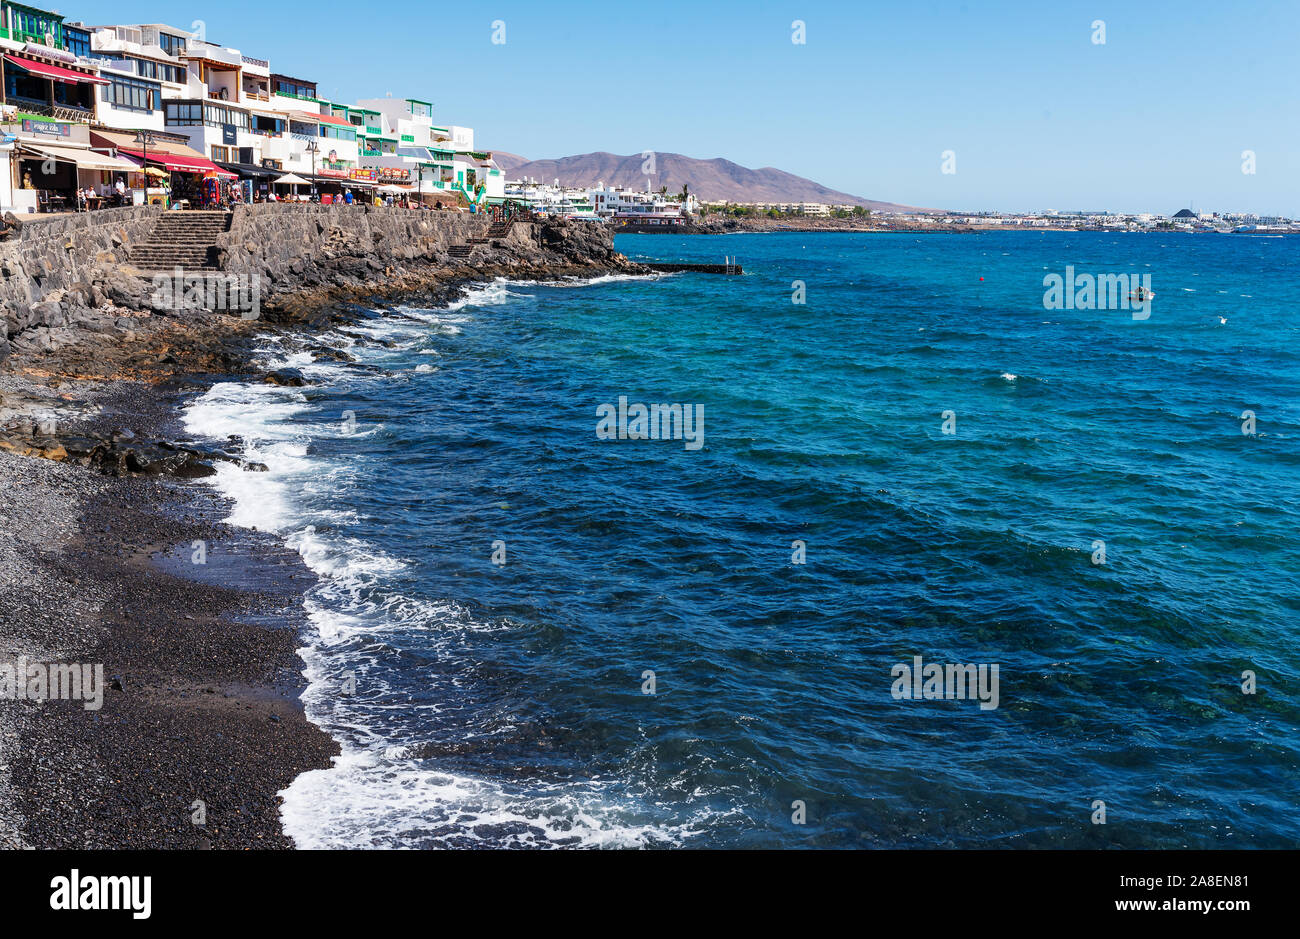 Playa blanca lanzarote shop hi-res stock photography and images - Alamy